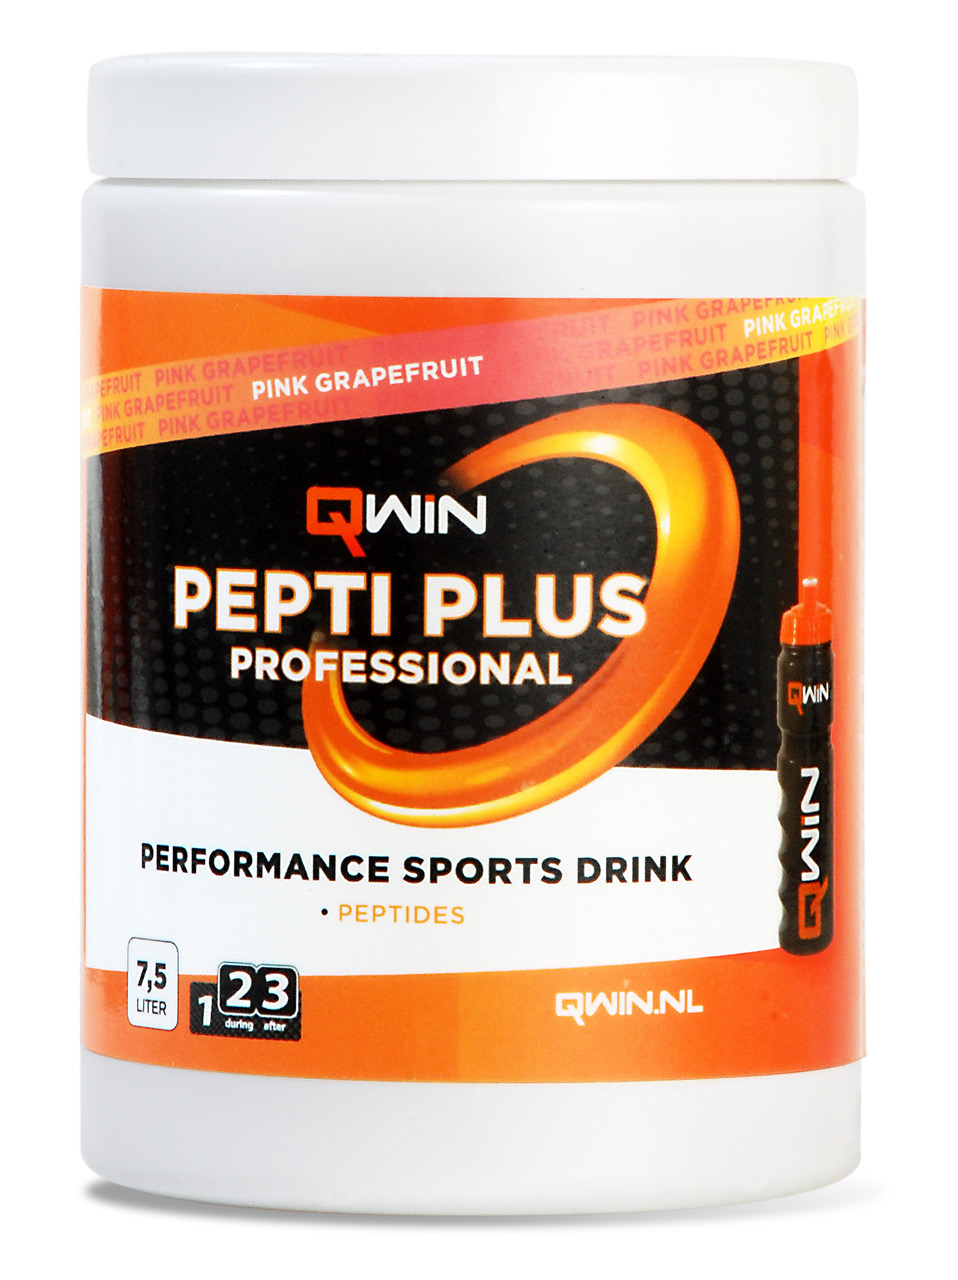 QWIN-PeptiPlus-Pink-Grapefruit-75-liter.jpg